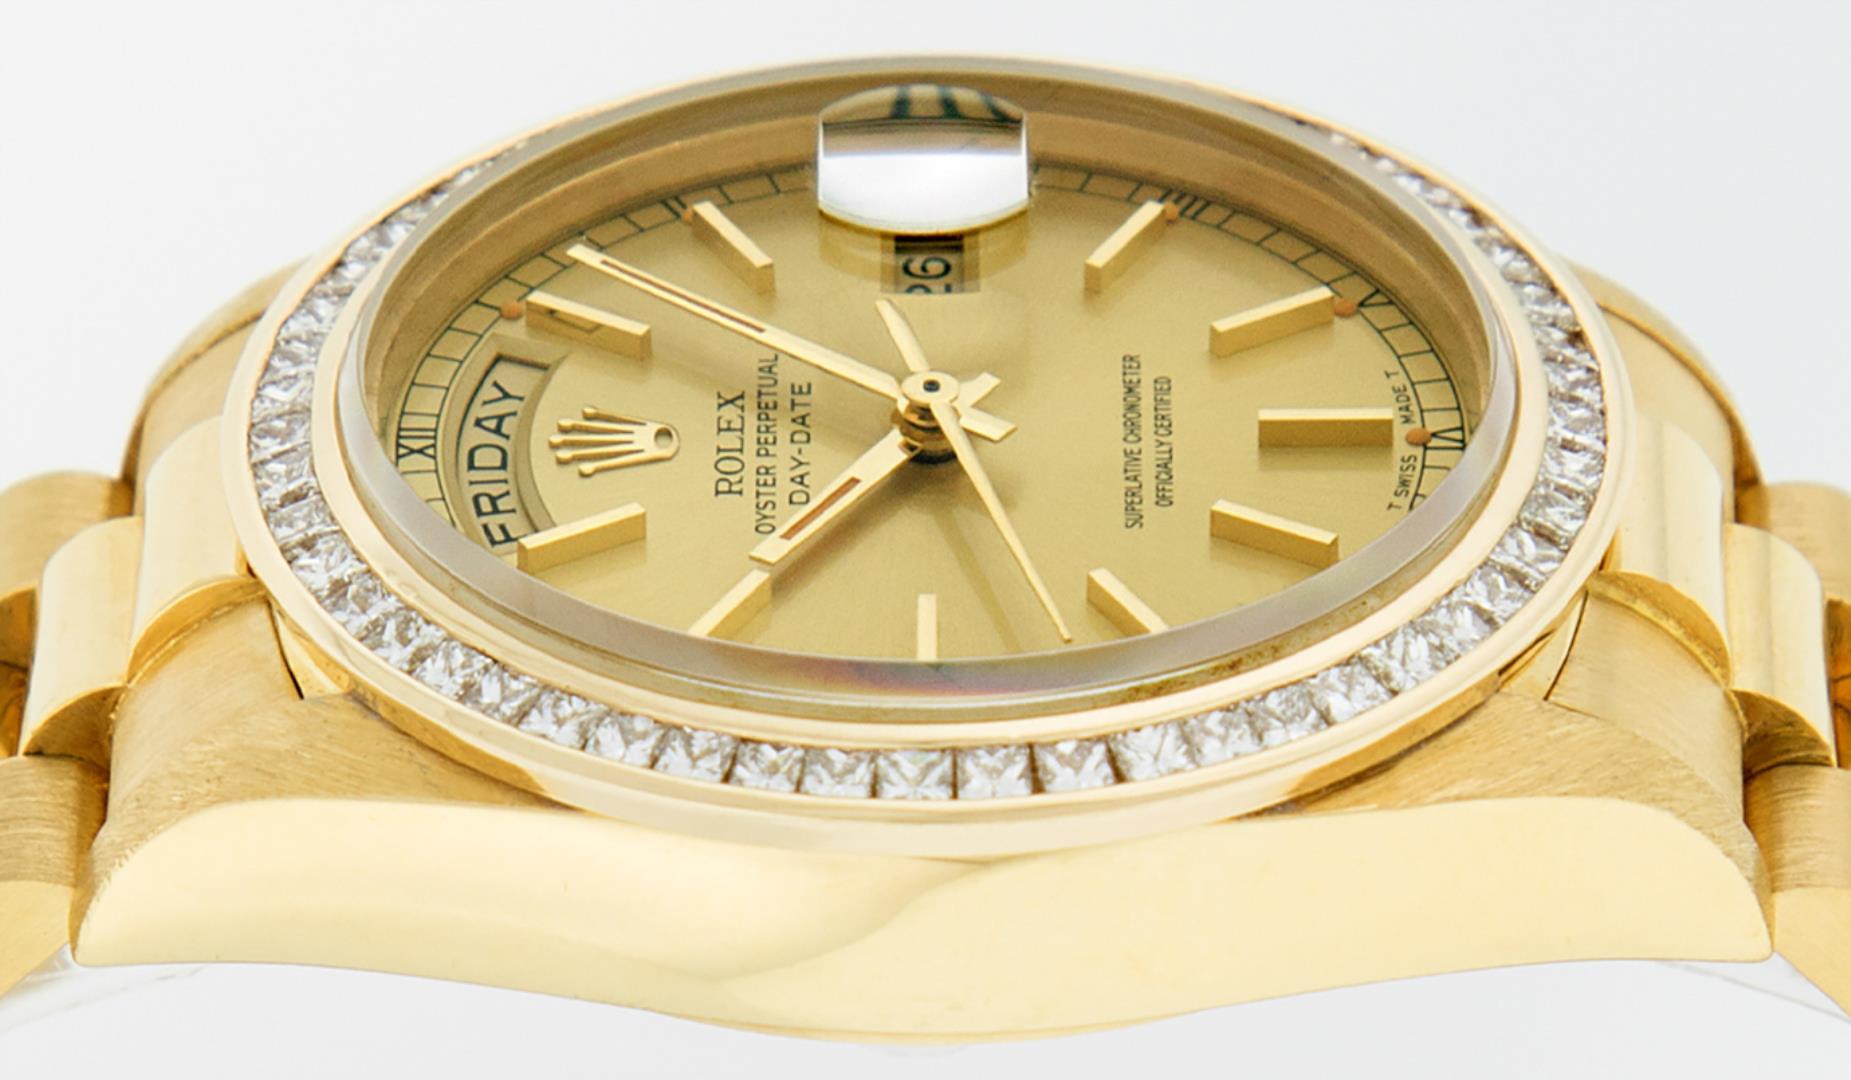 Rolex Men's 18K Yellow Gold Champagne 2.75 ctw Diamond Day Date President Wristwatch